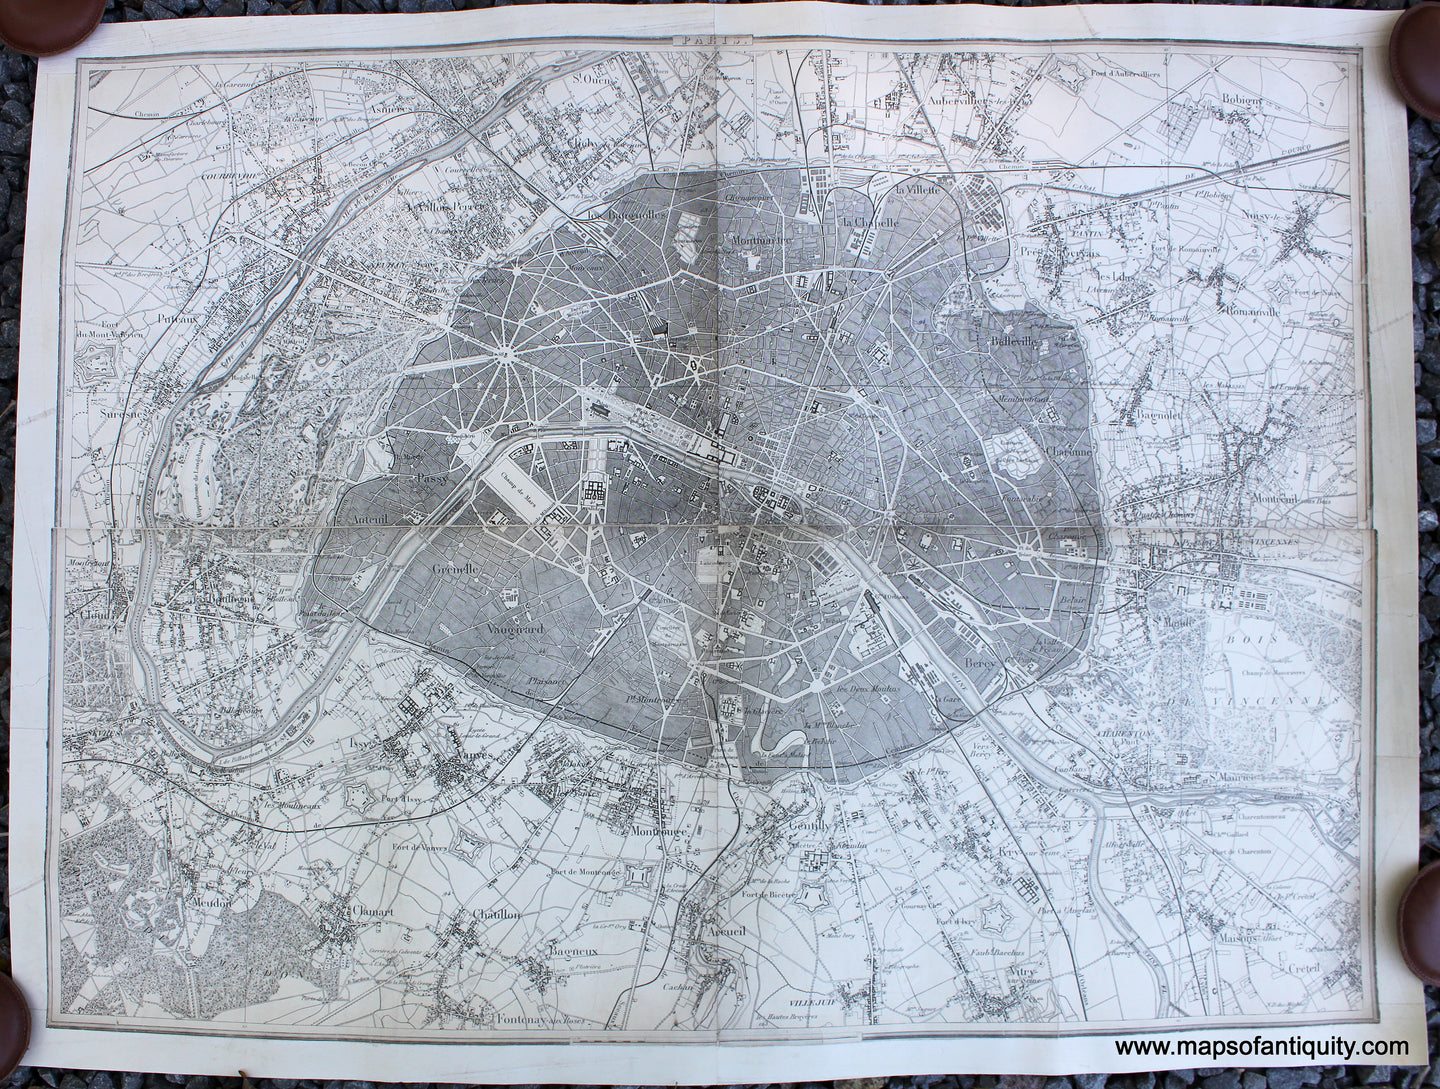 Antique-Map-Paris-c.-1870s-1880s-Unknown-France-1800s-19th-century-Maps-of-Antiquity